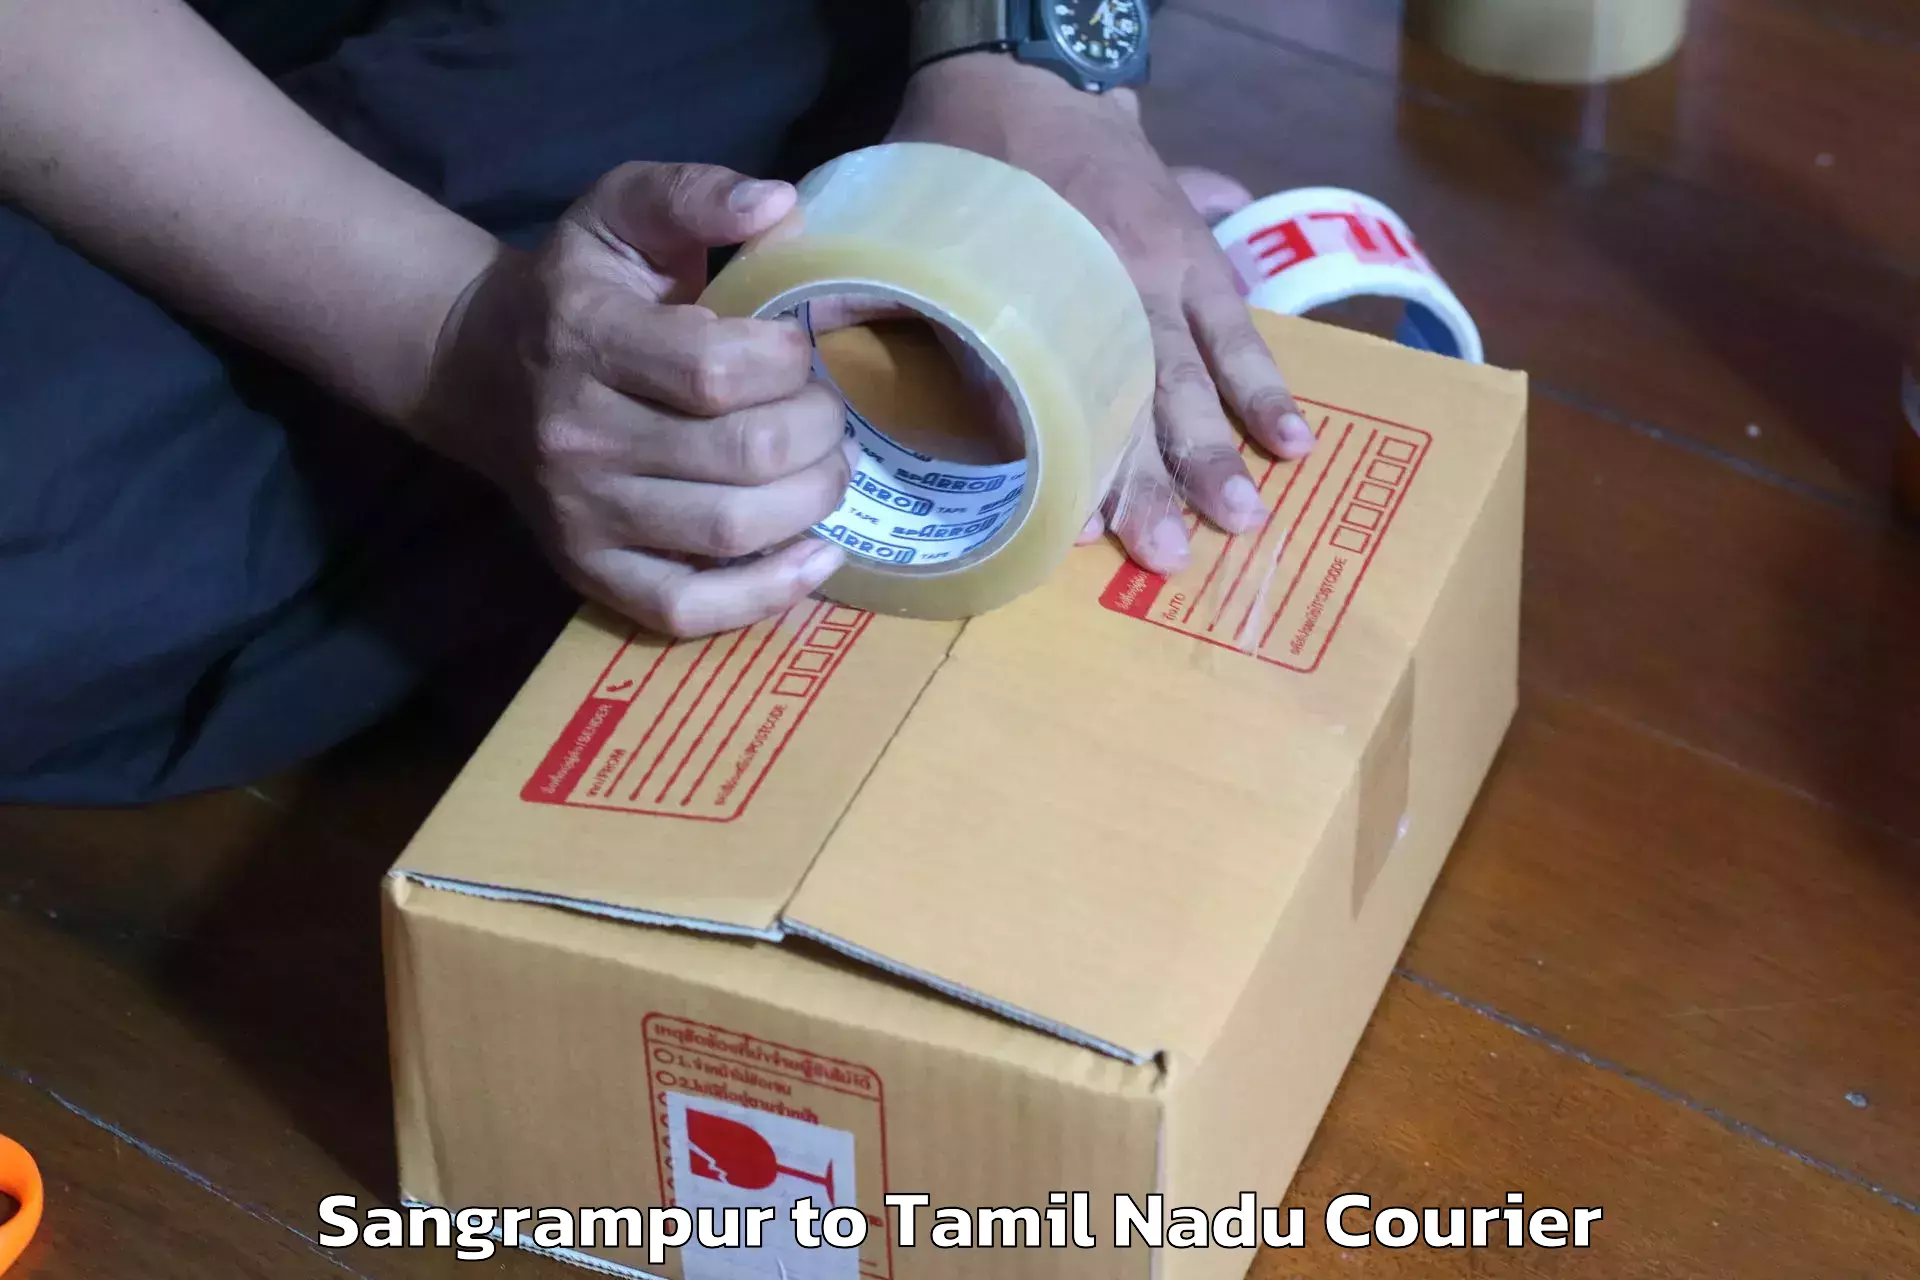 Household goods transport service Sangrampur to Chennai Port